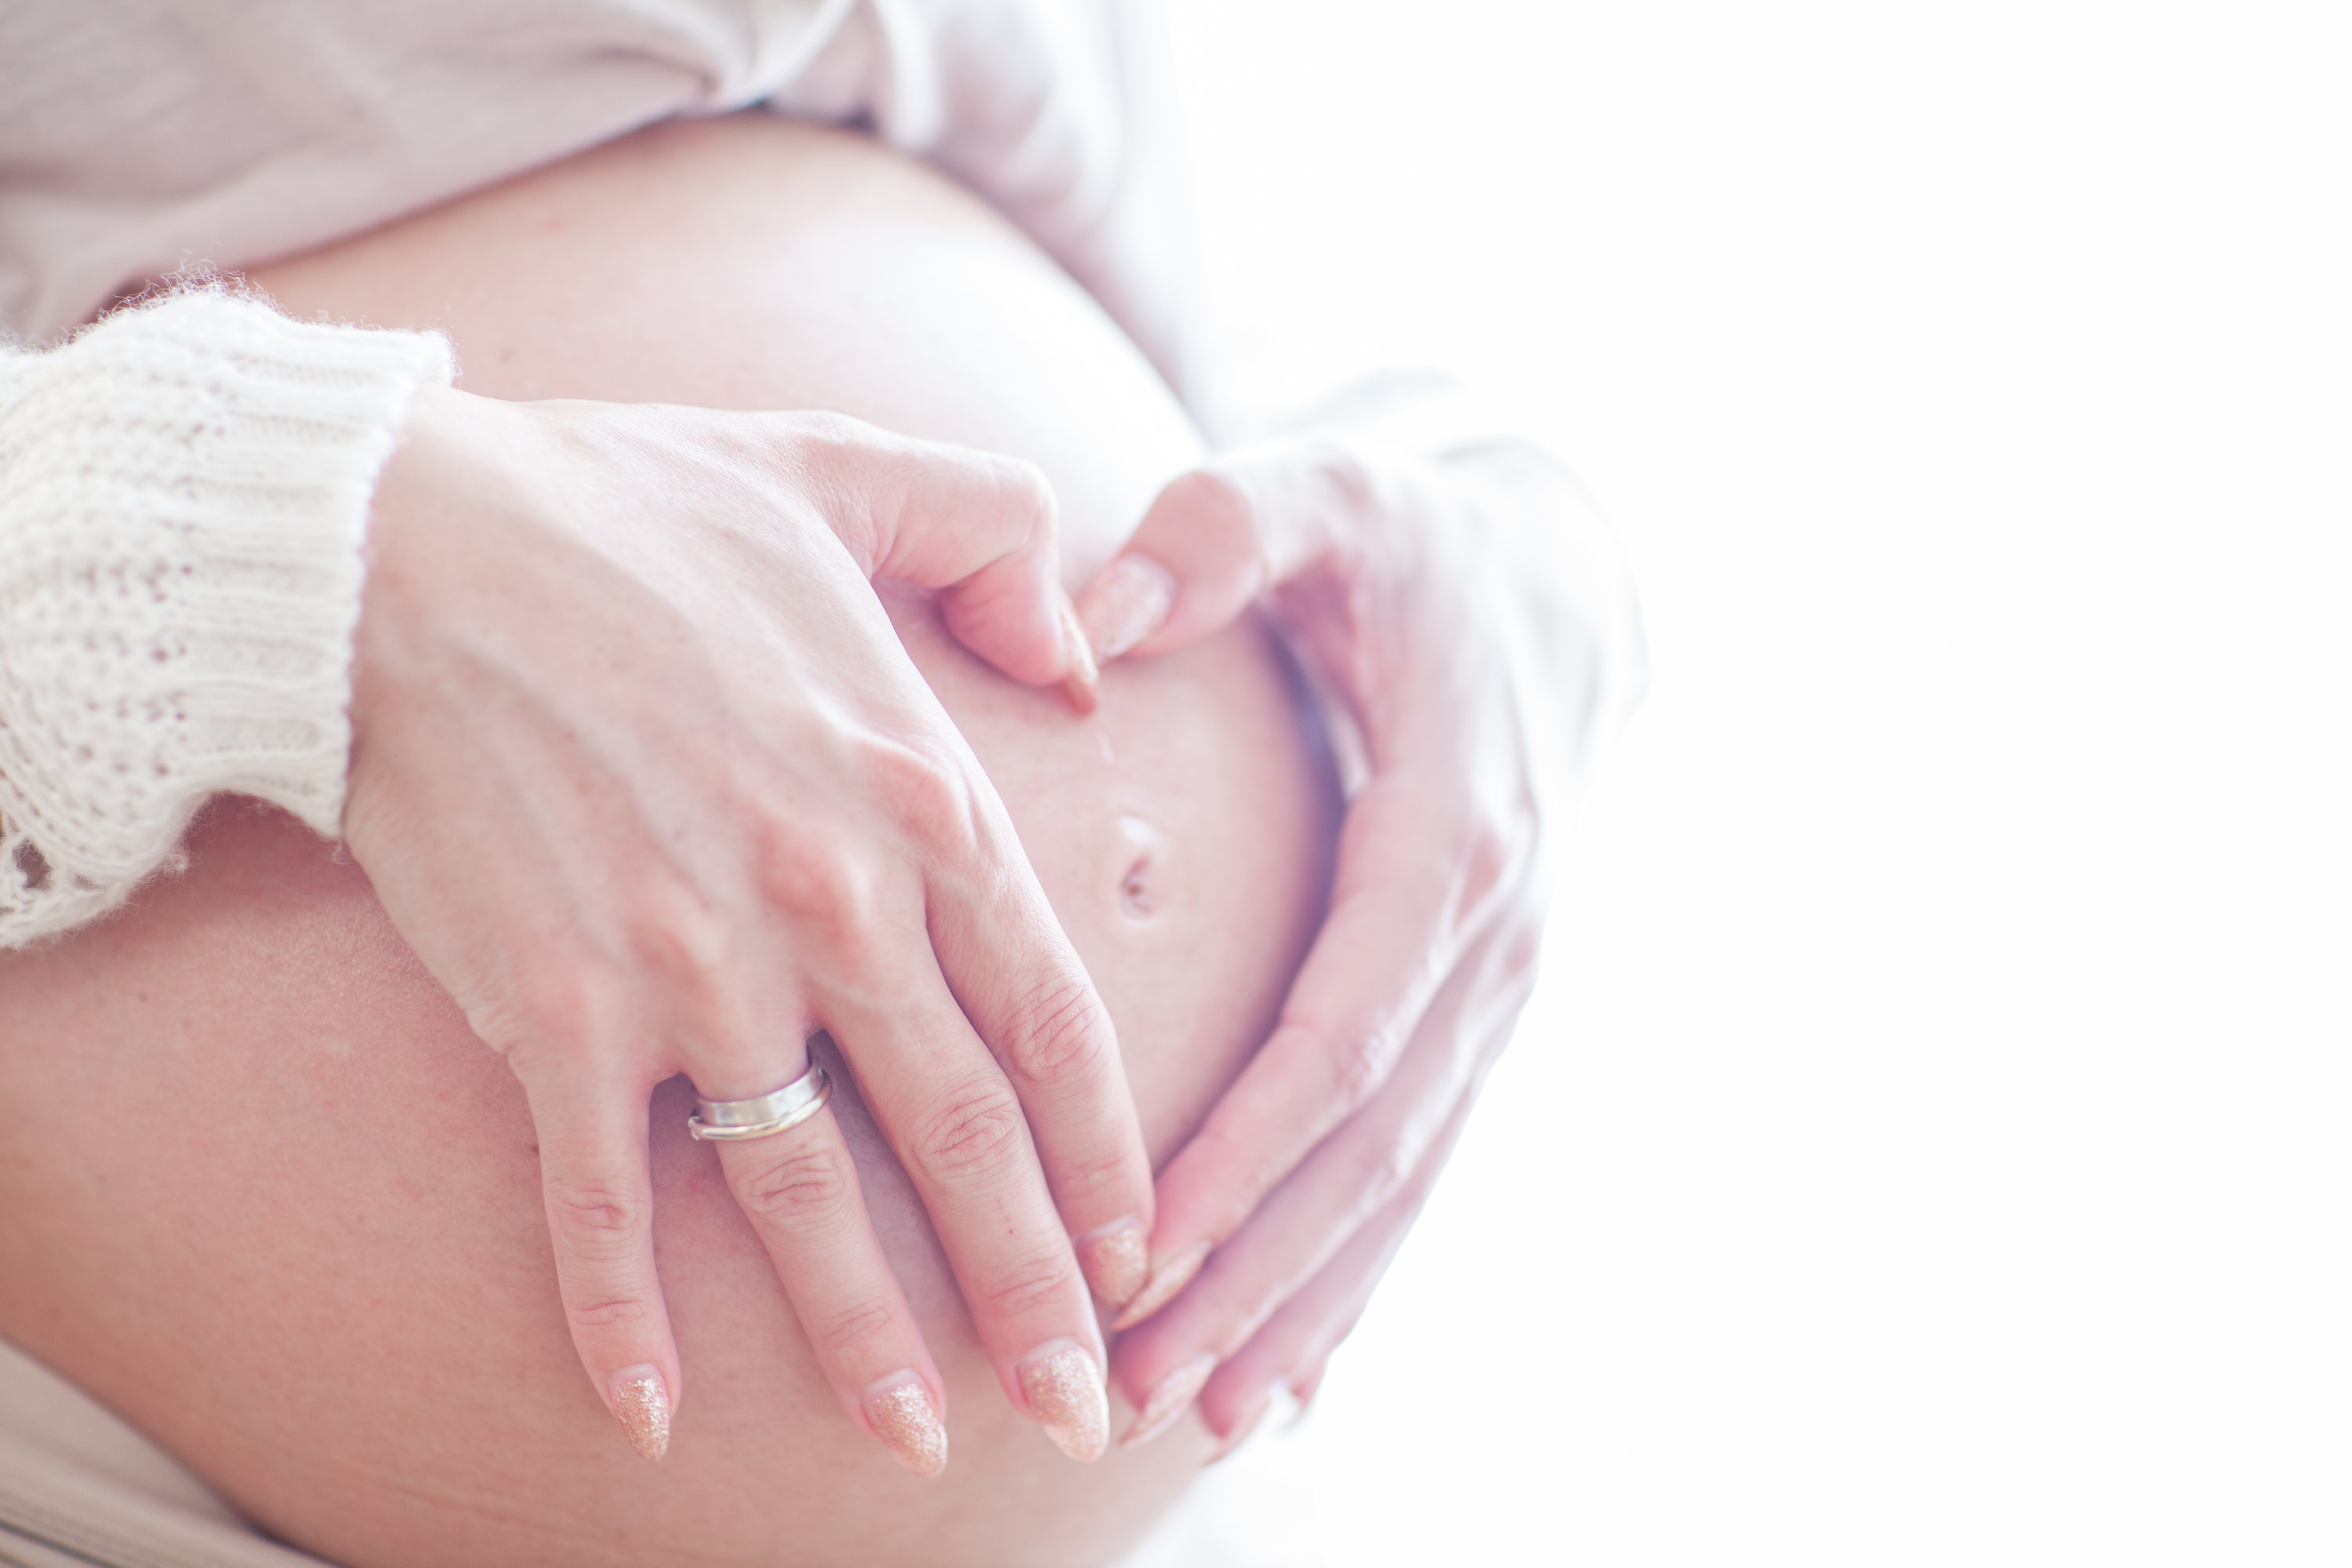 Schwangeren wird künftig empfohlen, sich zu Beginn des dritten Trimesters gegen Keuchhusten impfen zu lassen. Foto: dpa/Klose